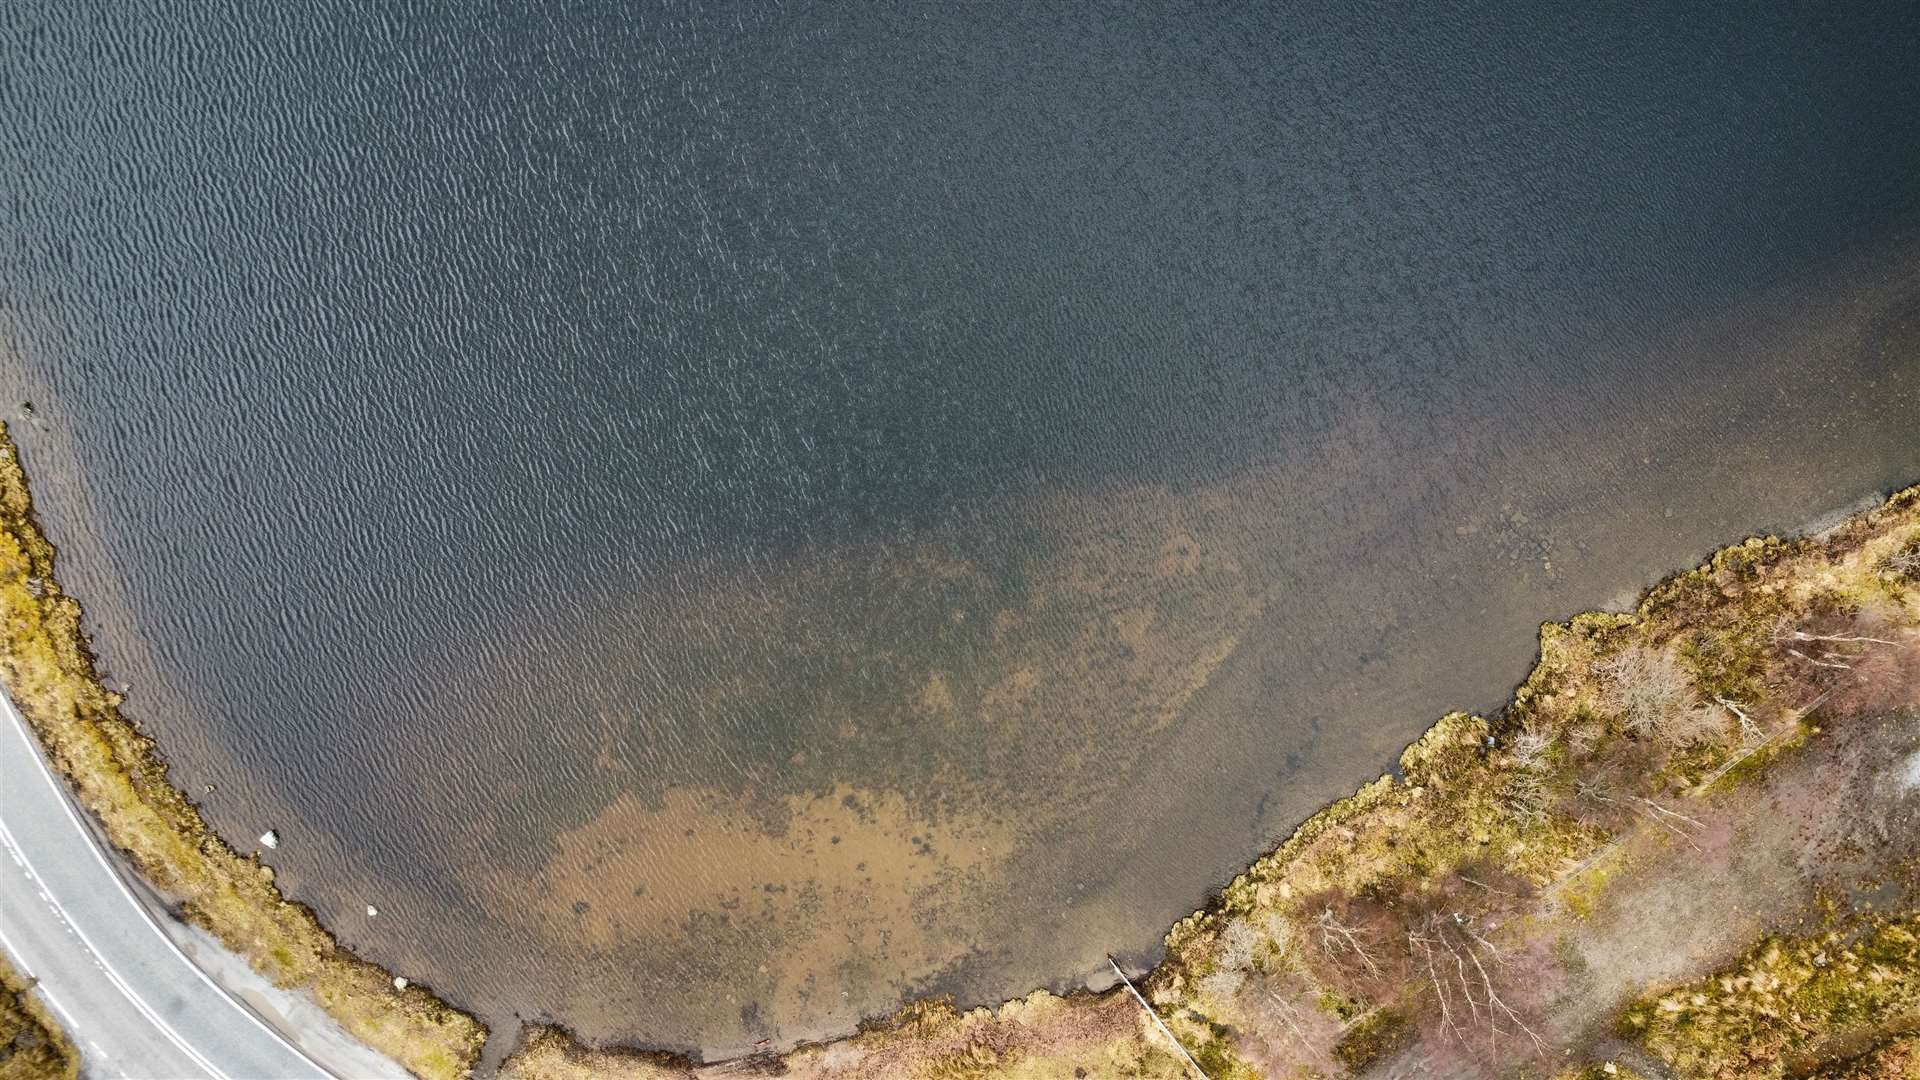 Looking down on the waters of Loch Tarff.